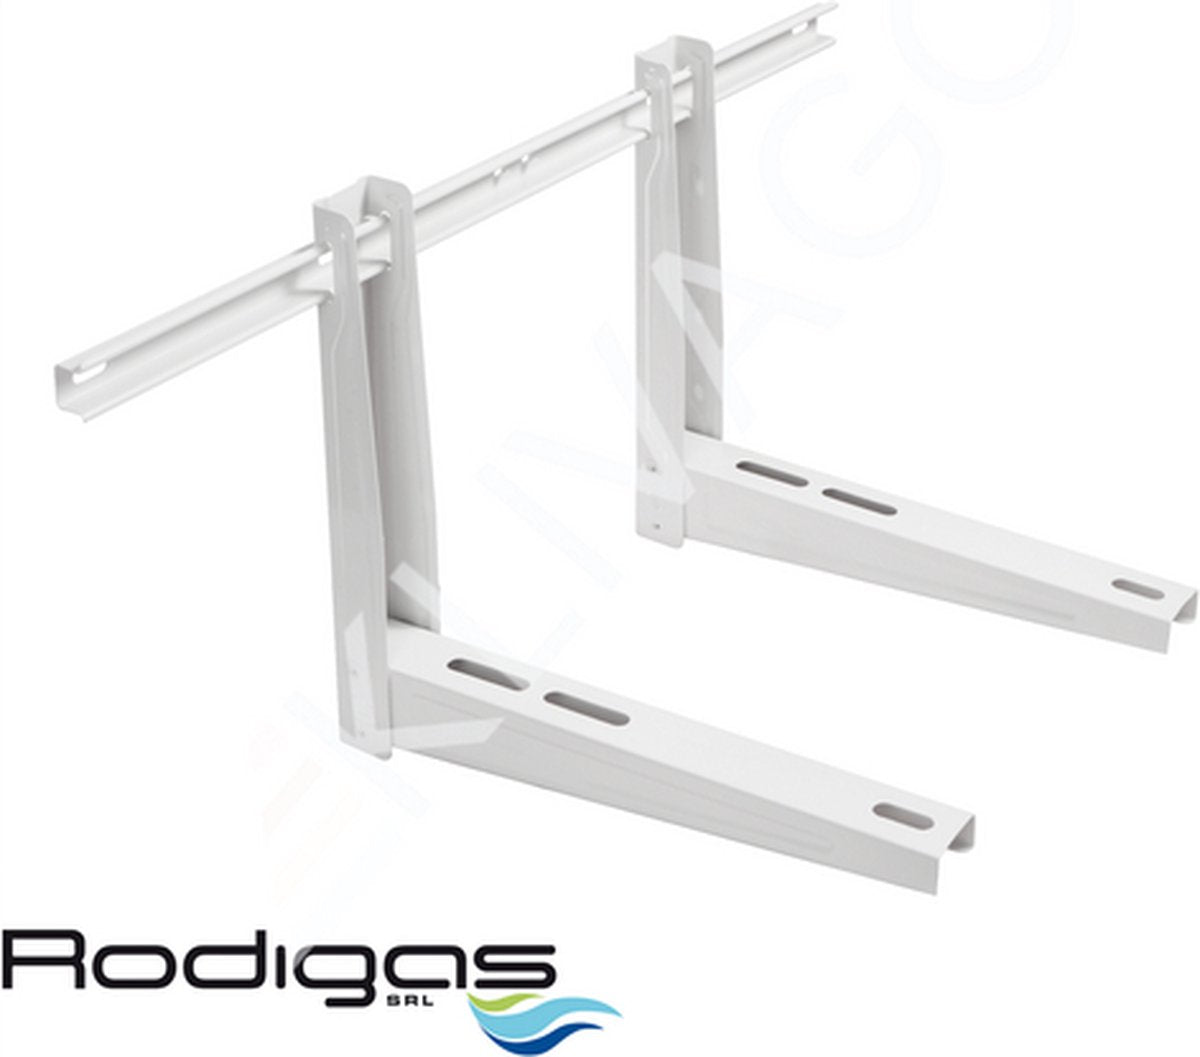 Rodigas MS230 - muurbeugel voor airconditioning - ophangframe voor airco buitenunit